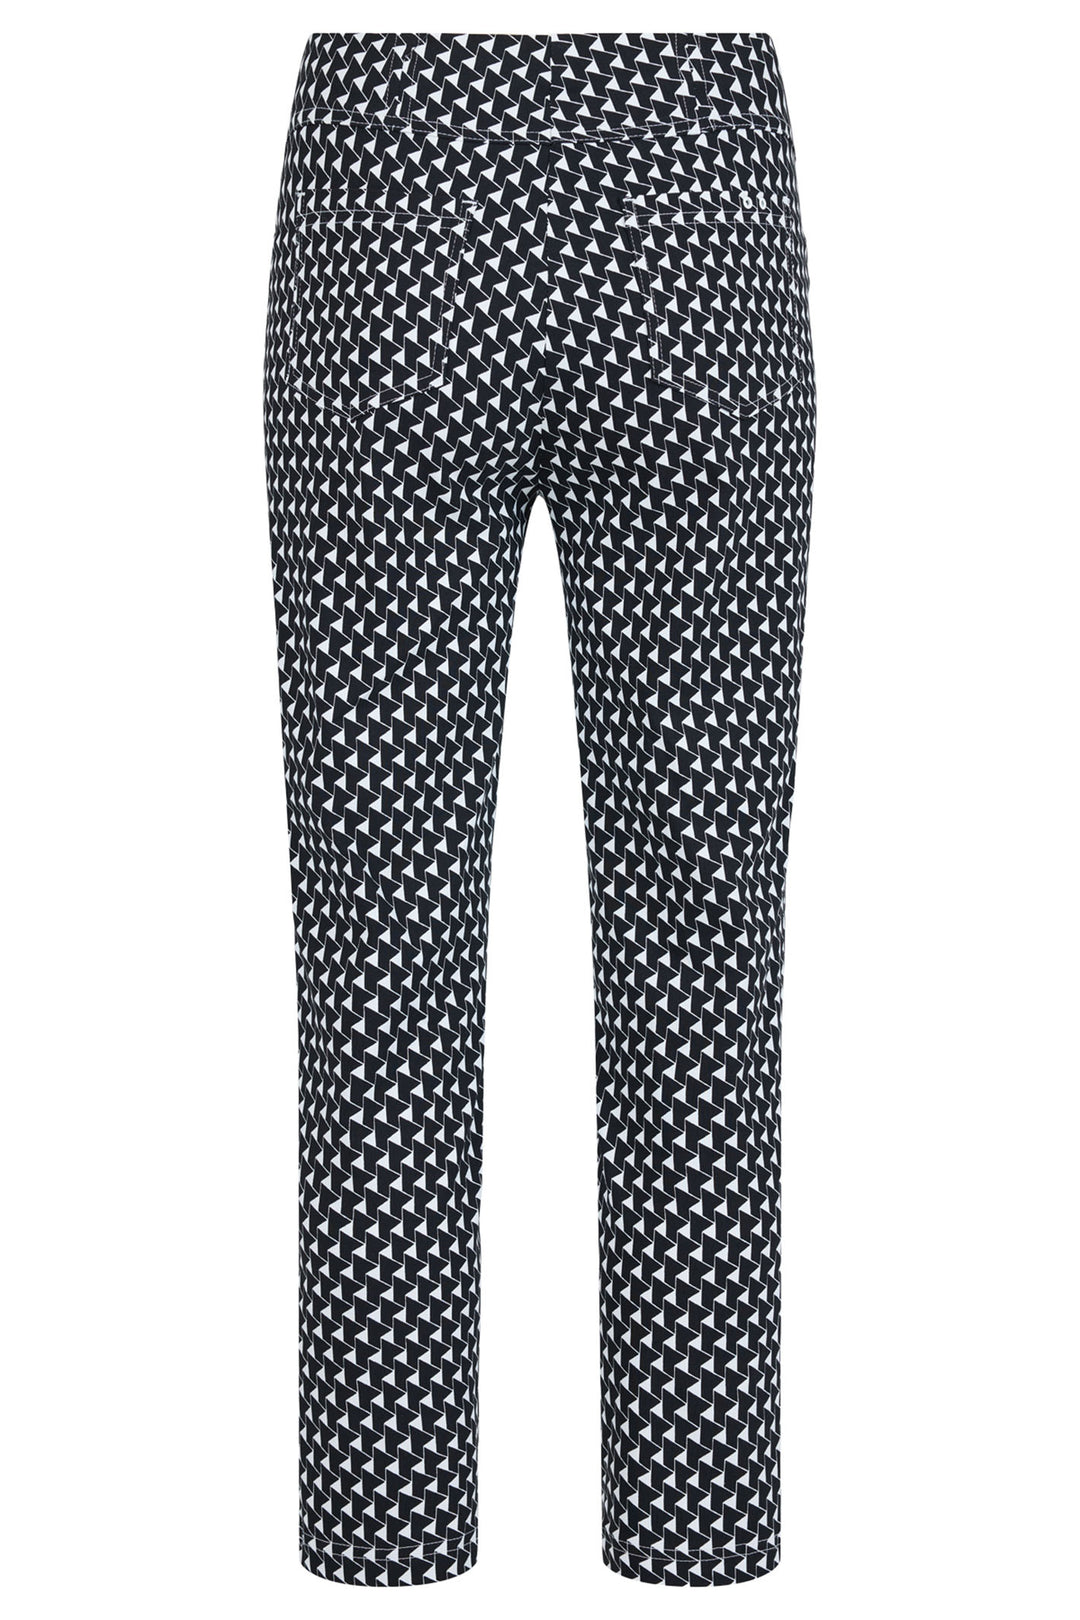 Robell 52483-54341-90 Bella Black Geometrc Print Pull-On 68cm Trousers - Olivia Grace Fashion